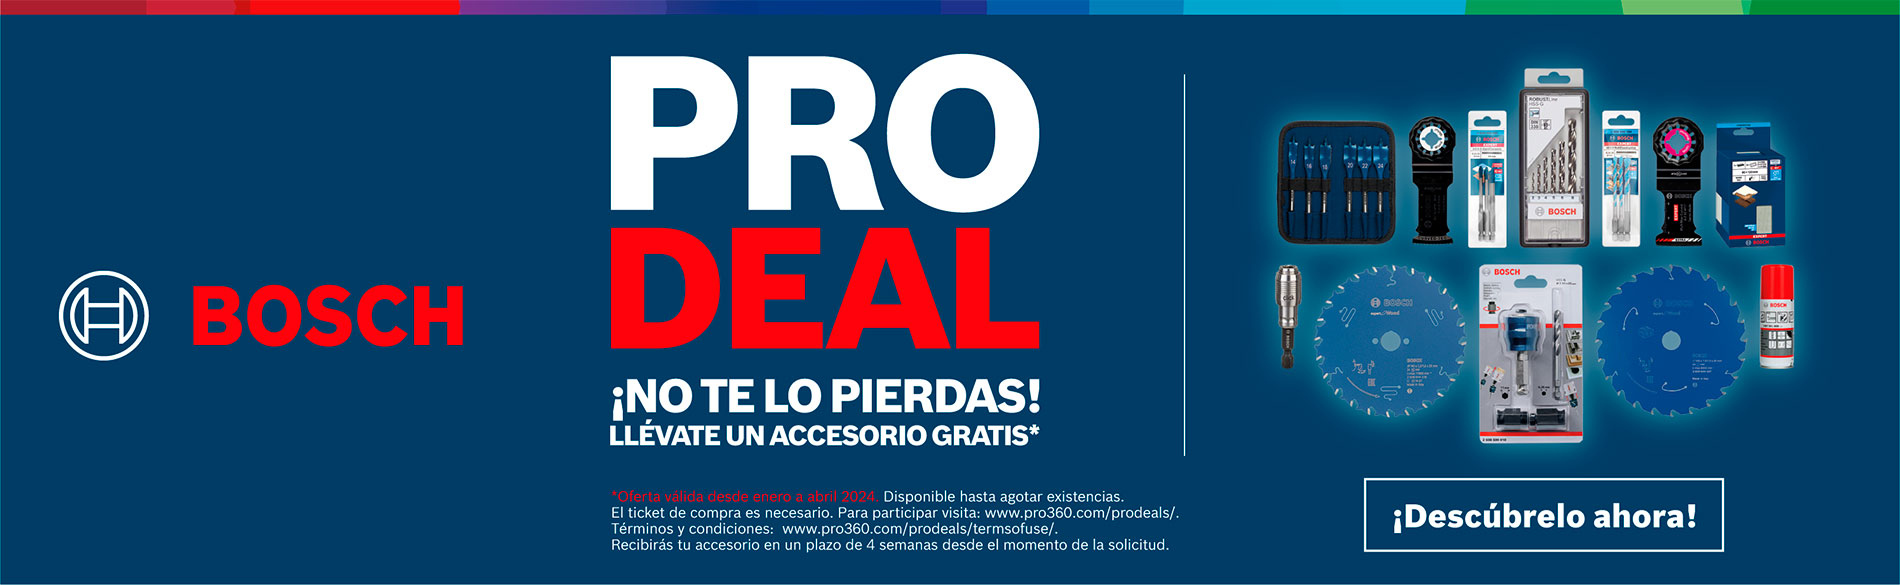 PRO Deal